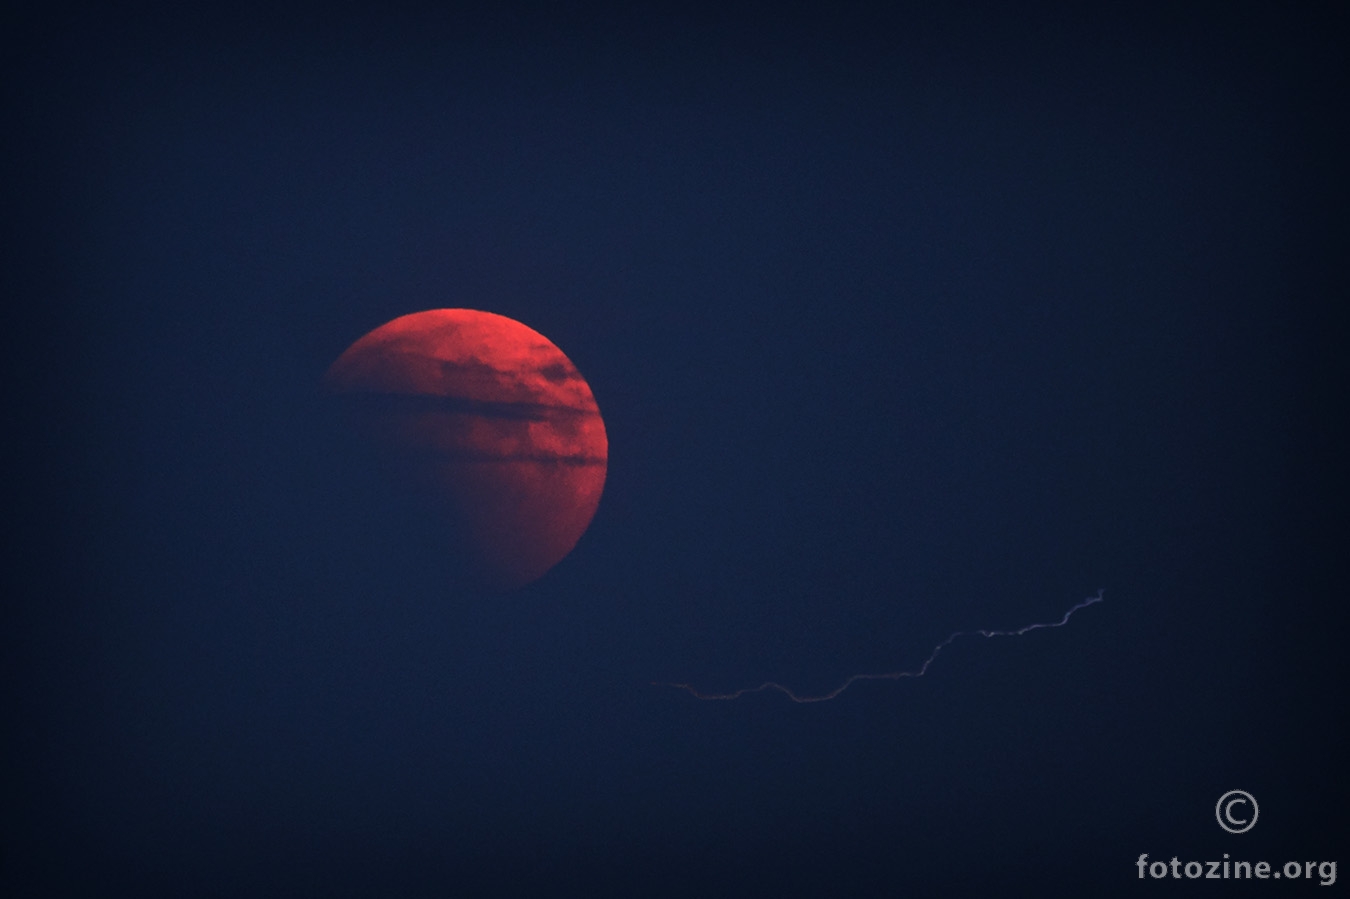 Blood red moon tonight...